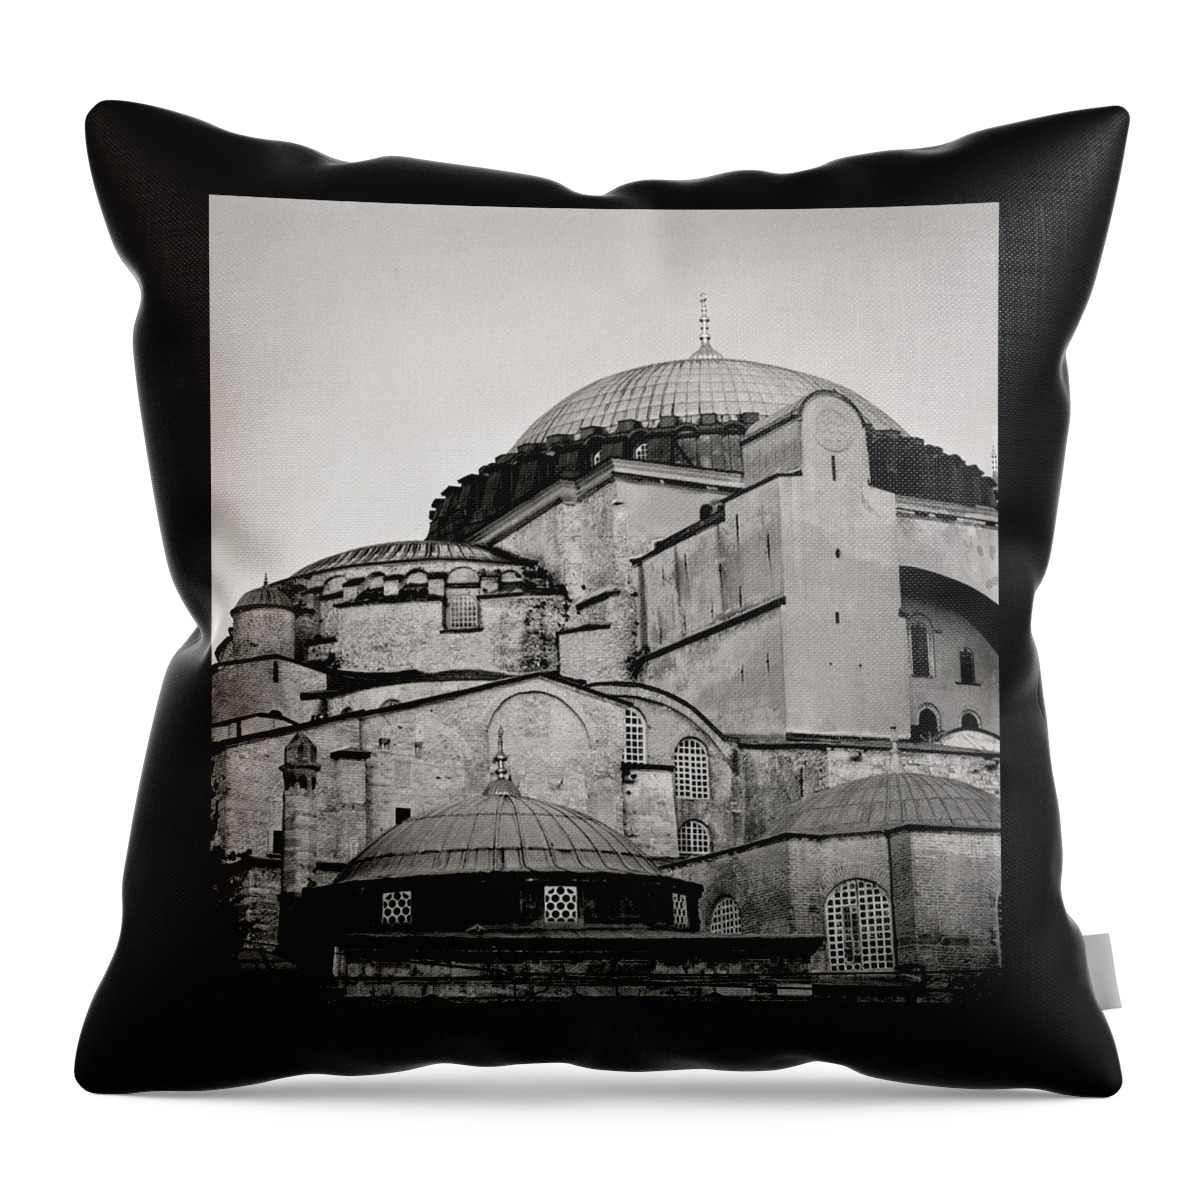 Hagia Sophia Throw Pillow featuring the photograph The Hagia Sophia by Shaun Higson